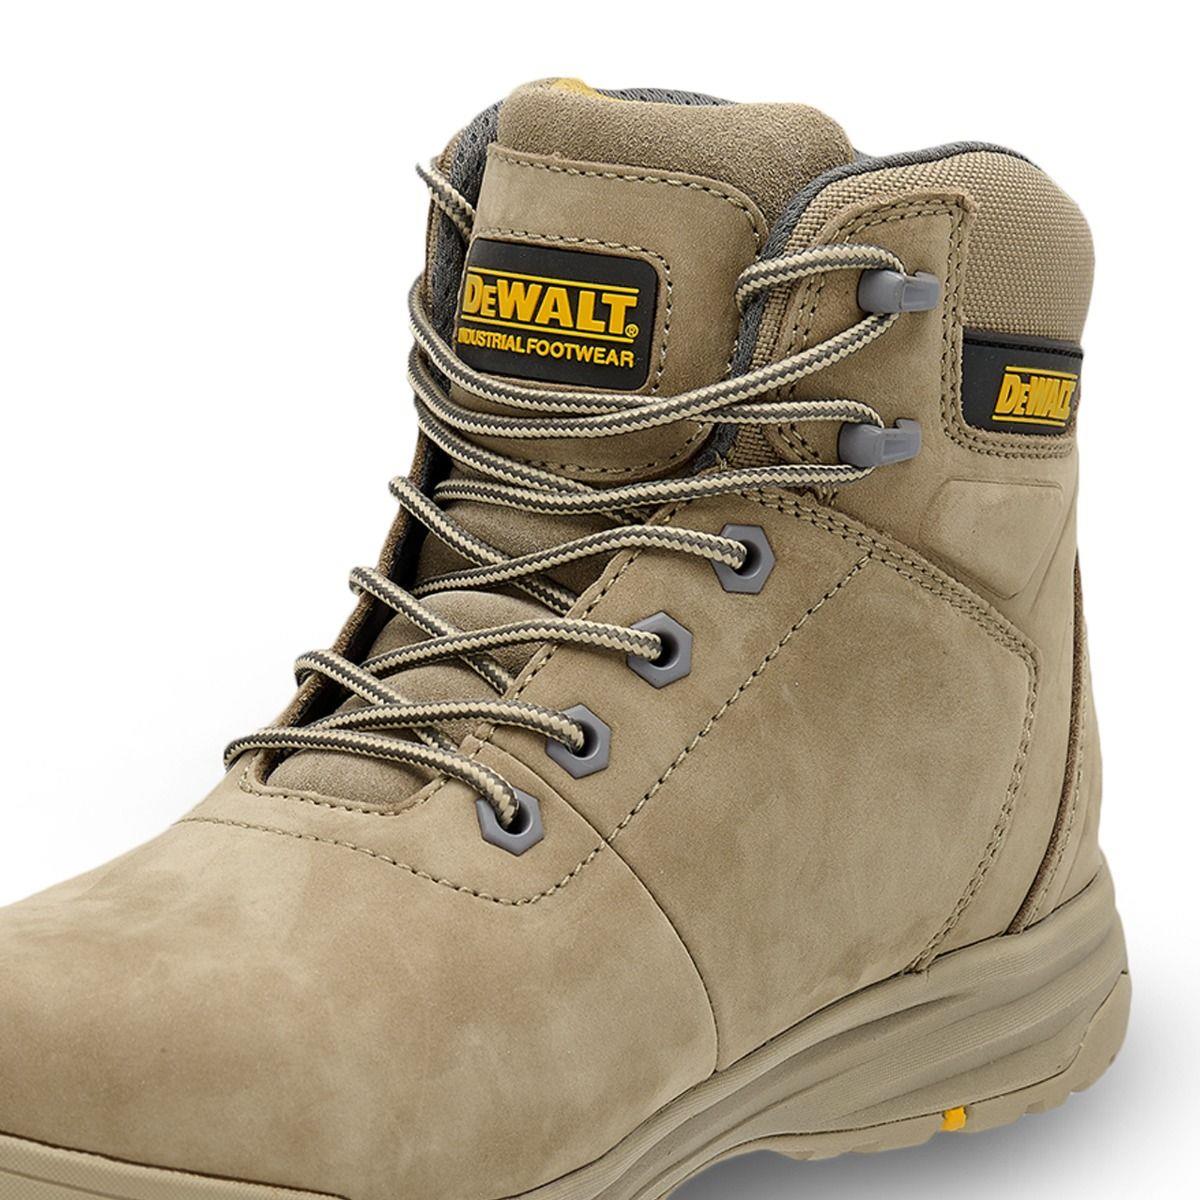 DeWalt Lima SB stone nubuck steel toe composite midsole work safety boots